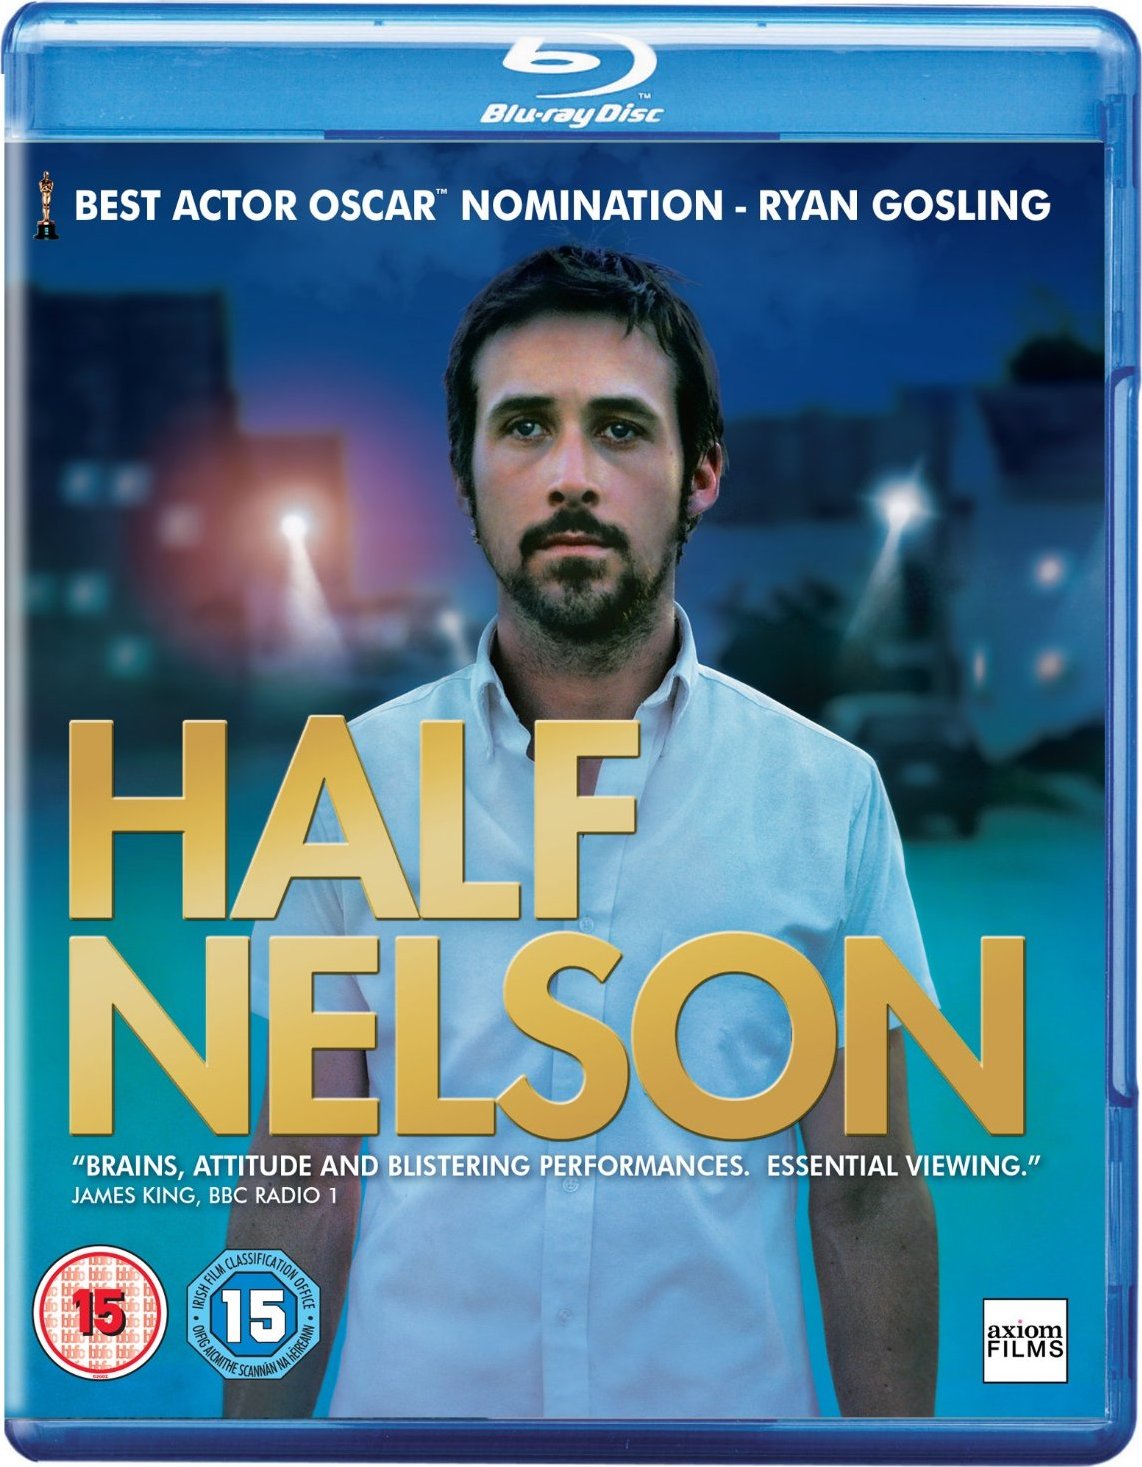 Half Nelson Blu-ray